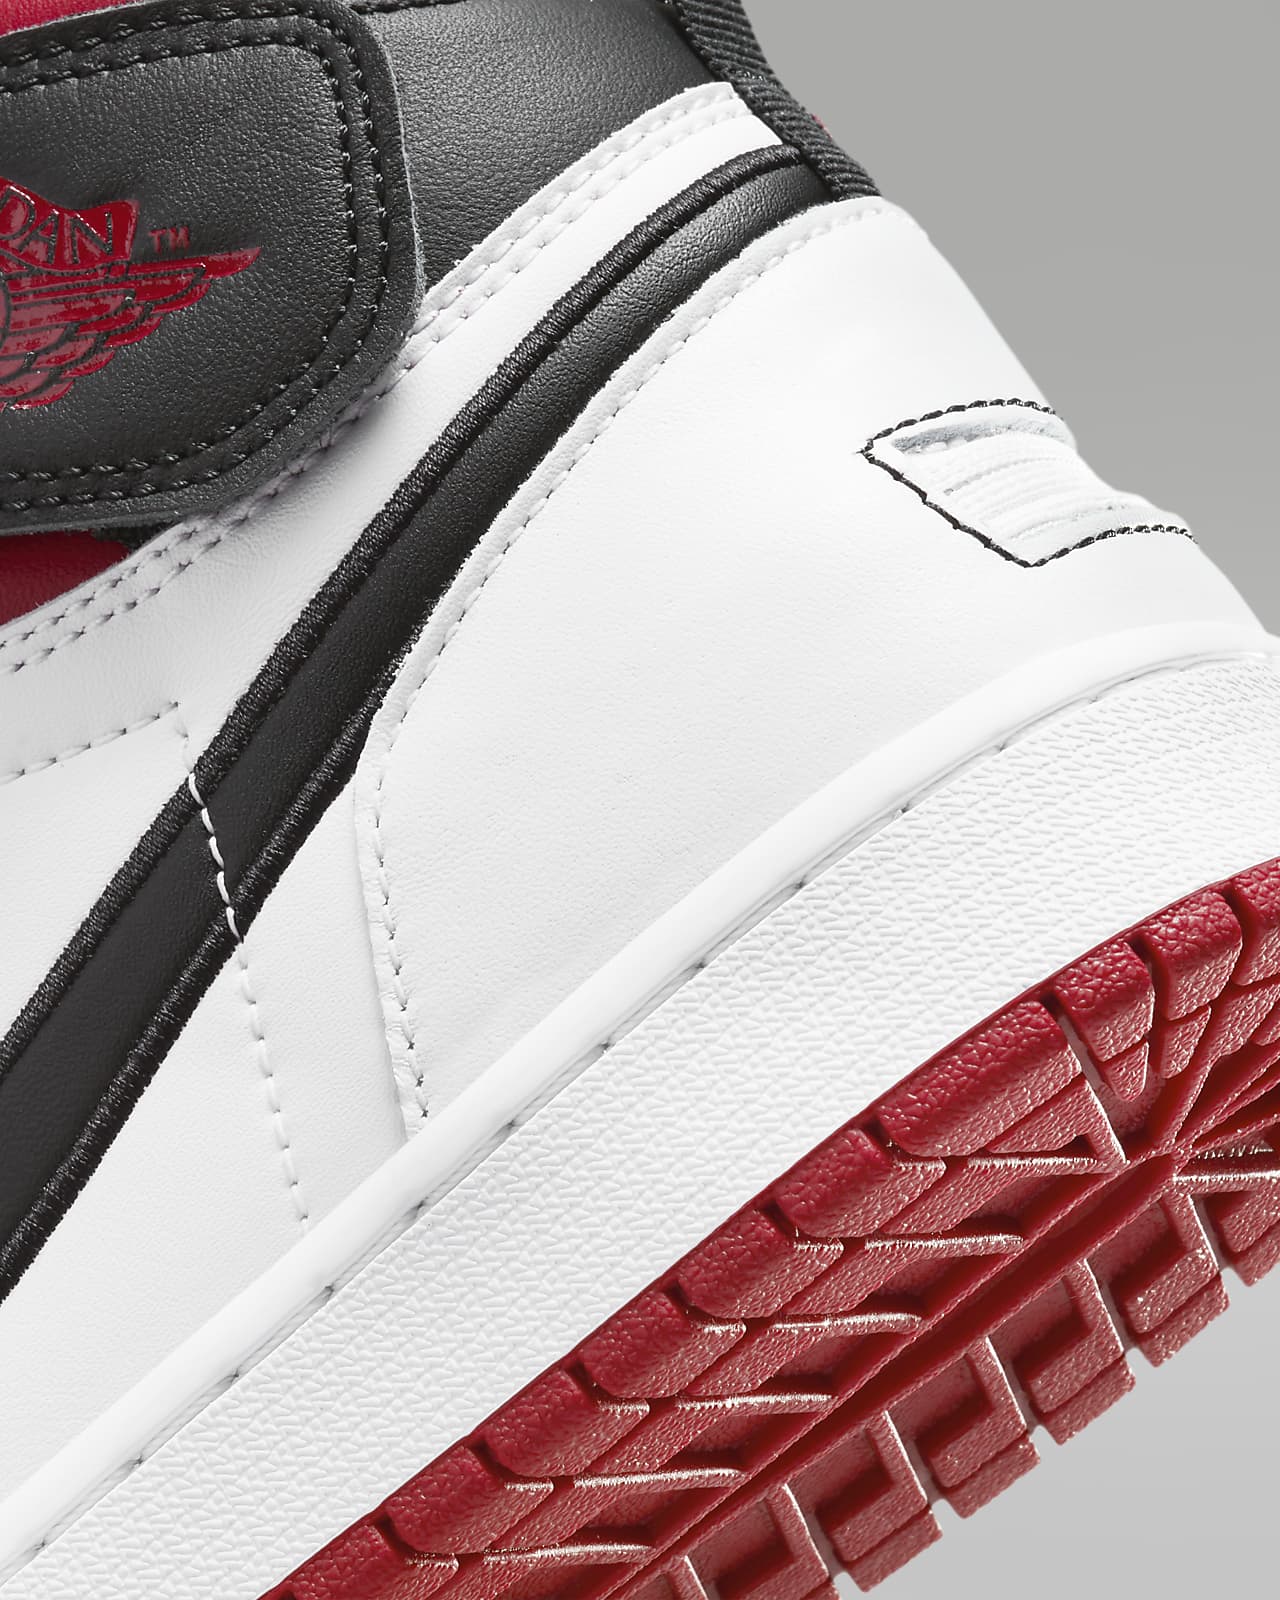 Air Jordan 1 White Red - Where To Buy